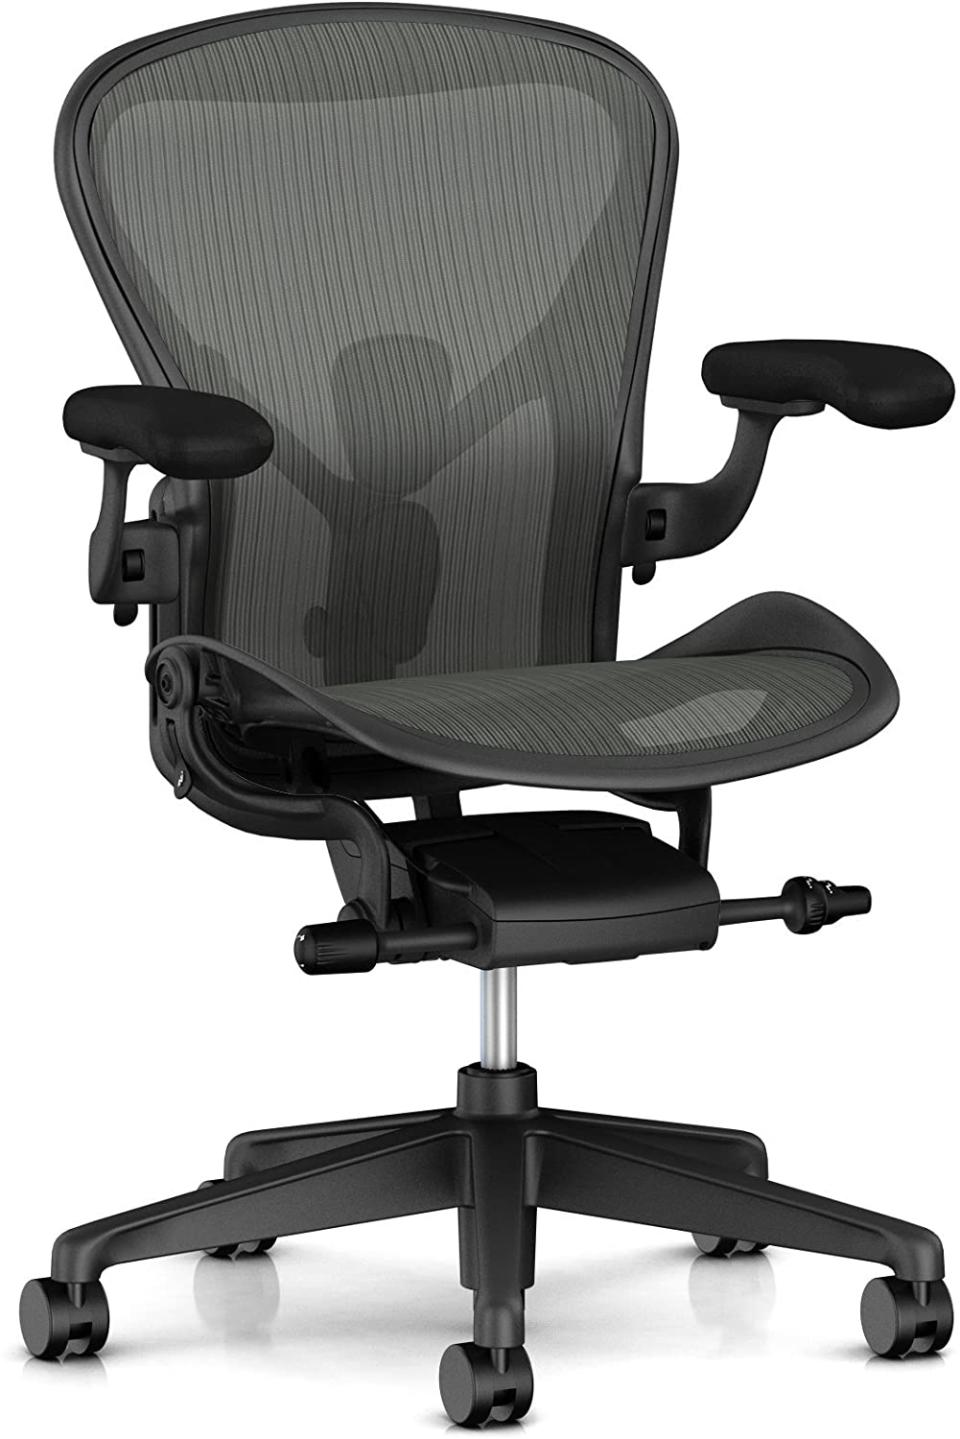 Herman Miller Aeron Ergonomic Chair - Size B, Graphite (Photo: Amazon)


